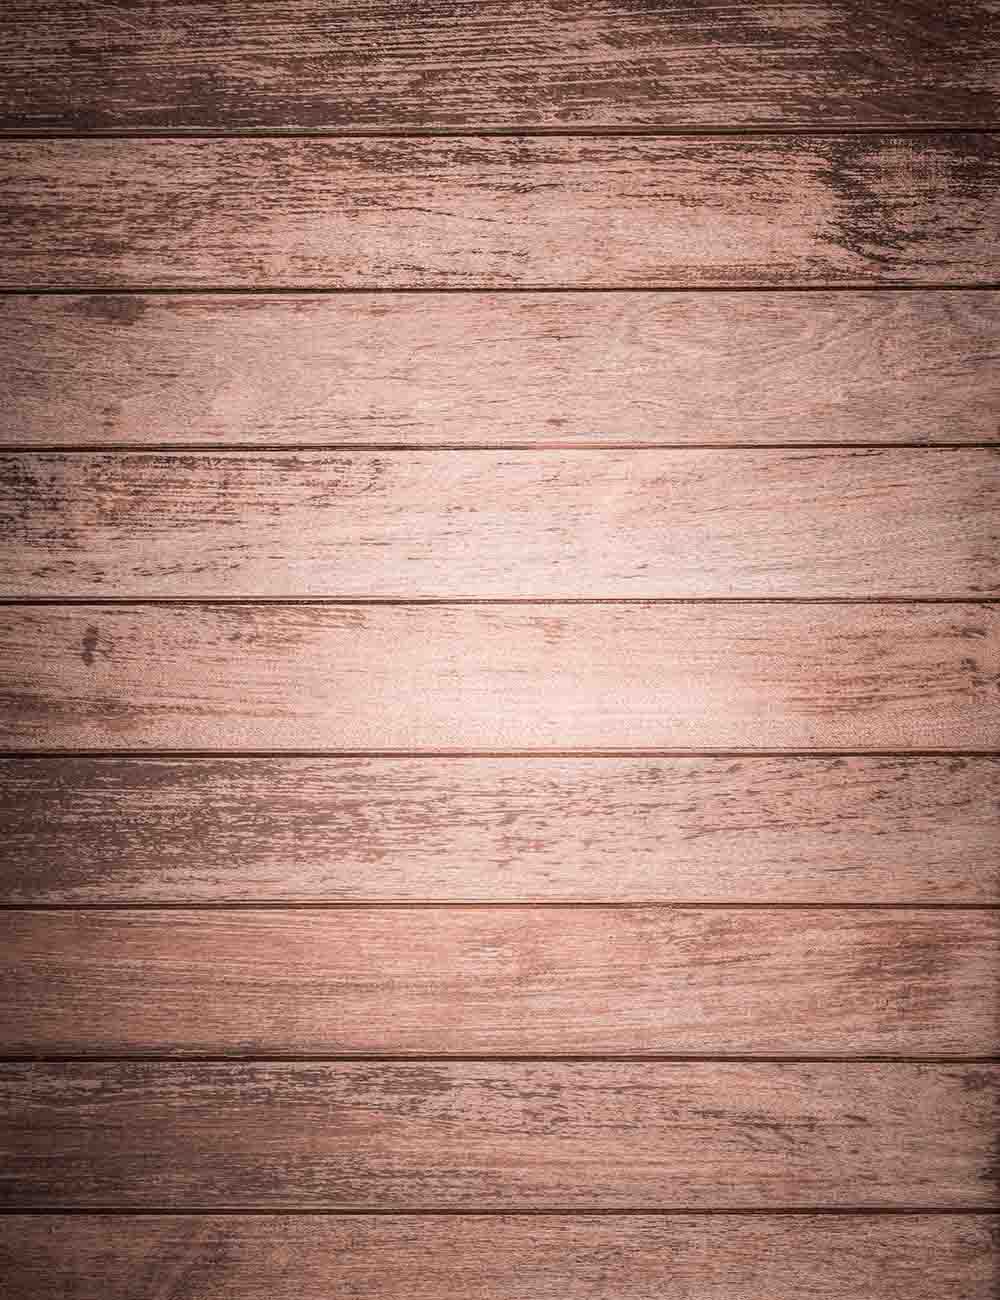 Senior Brown Wood Floor Texture Photography Backdrop Shopbackdrop